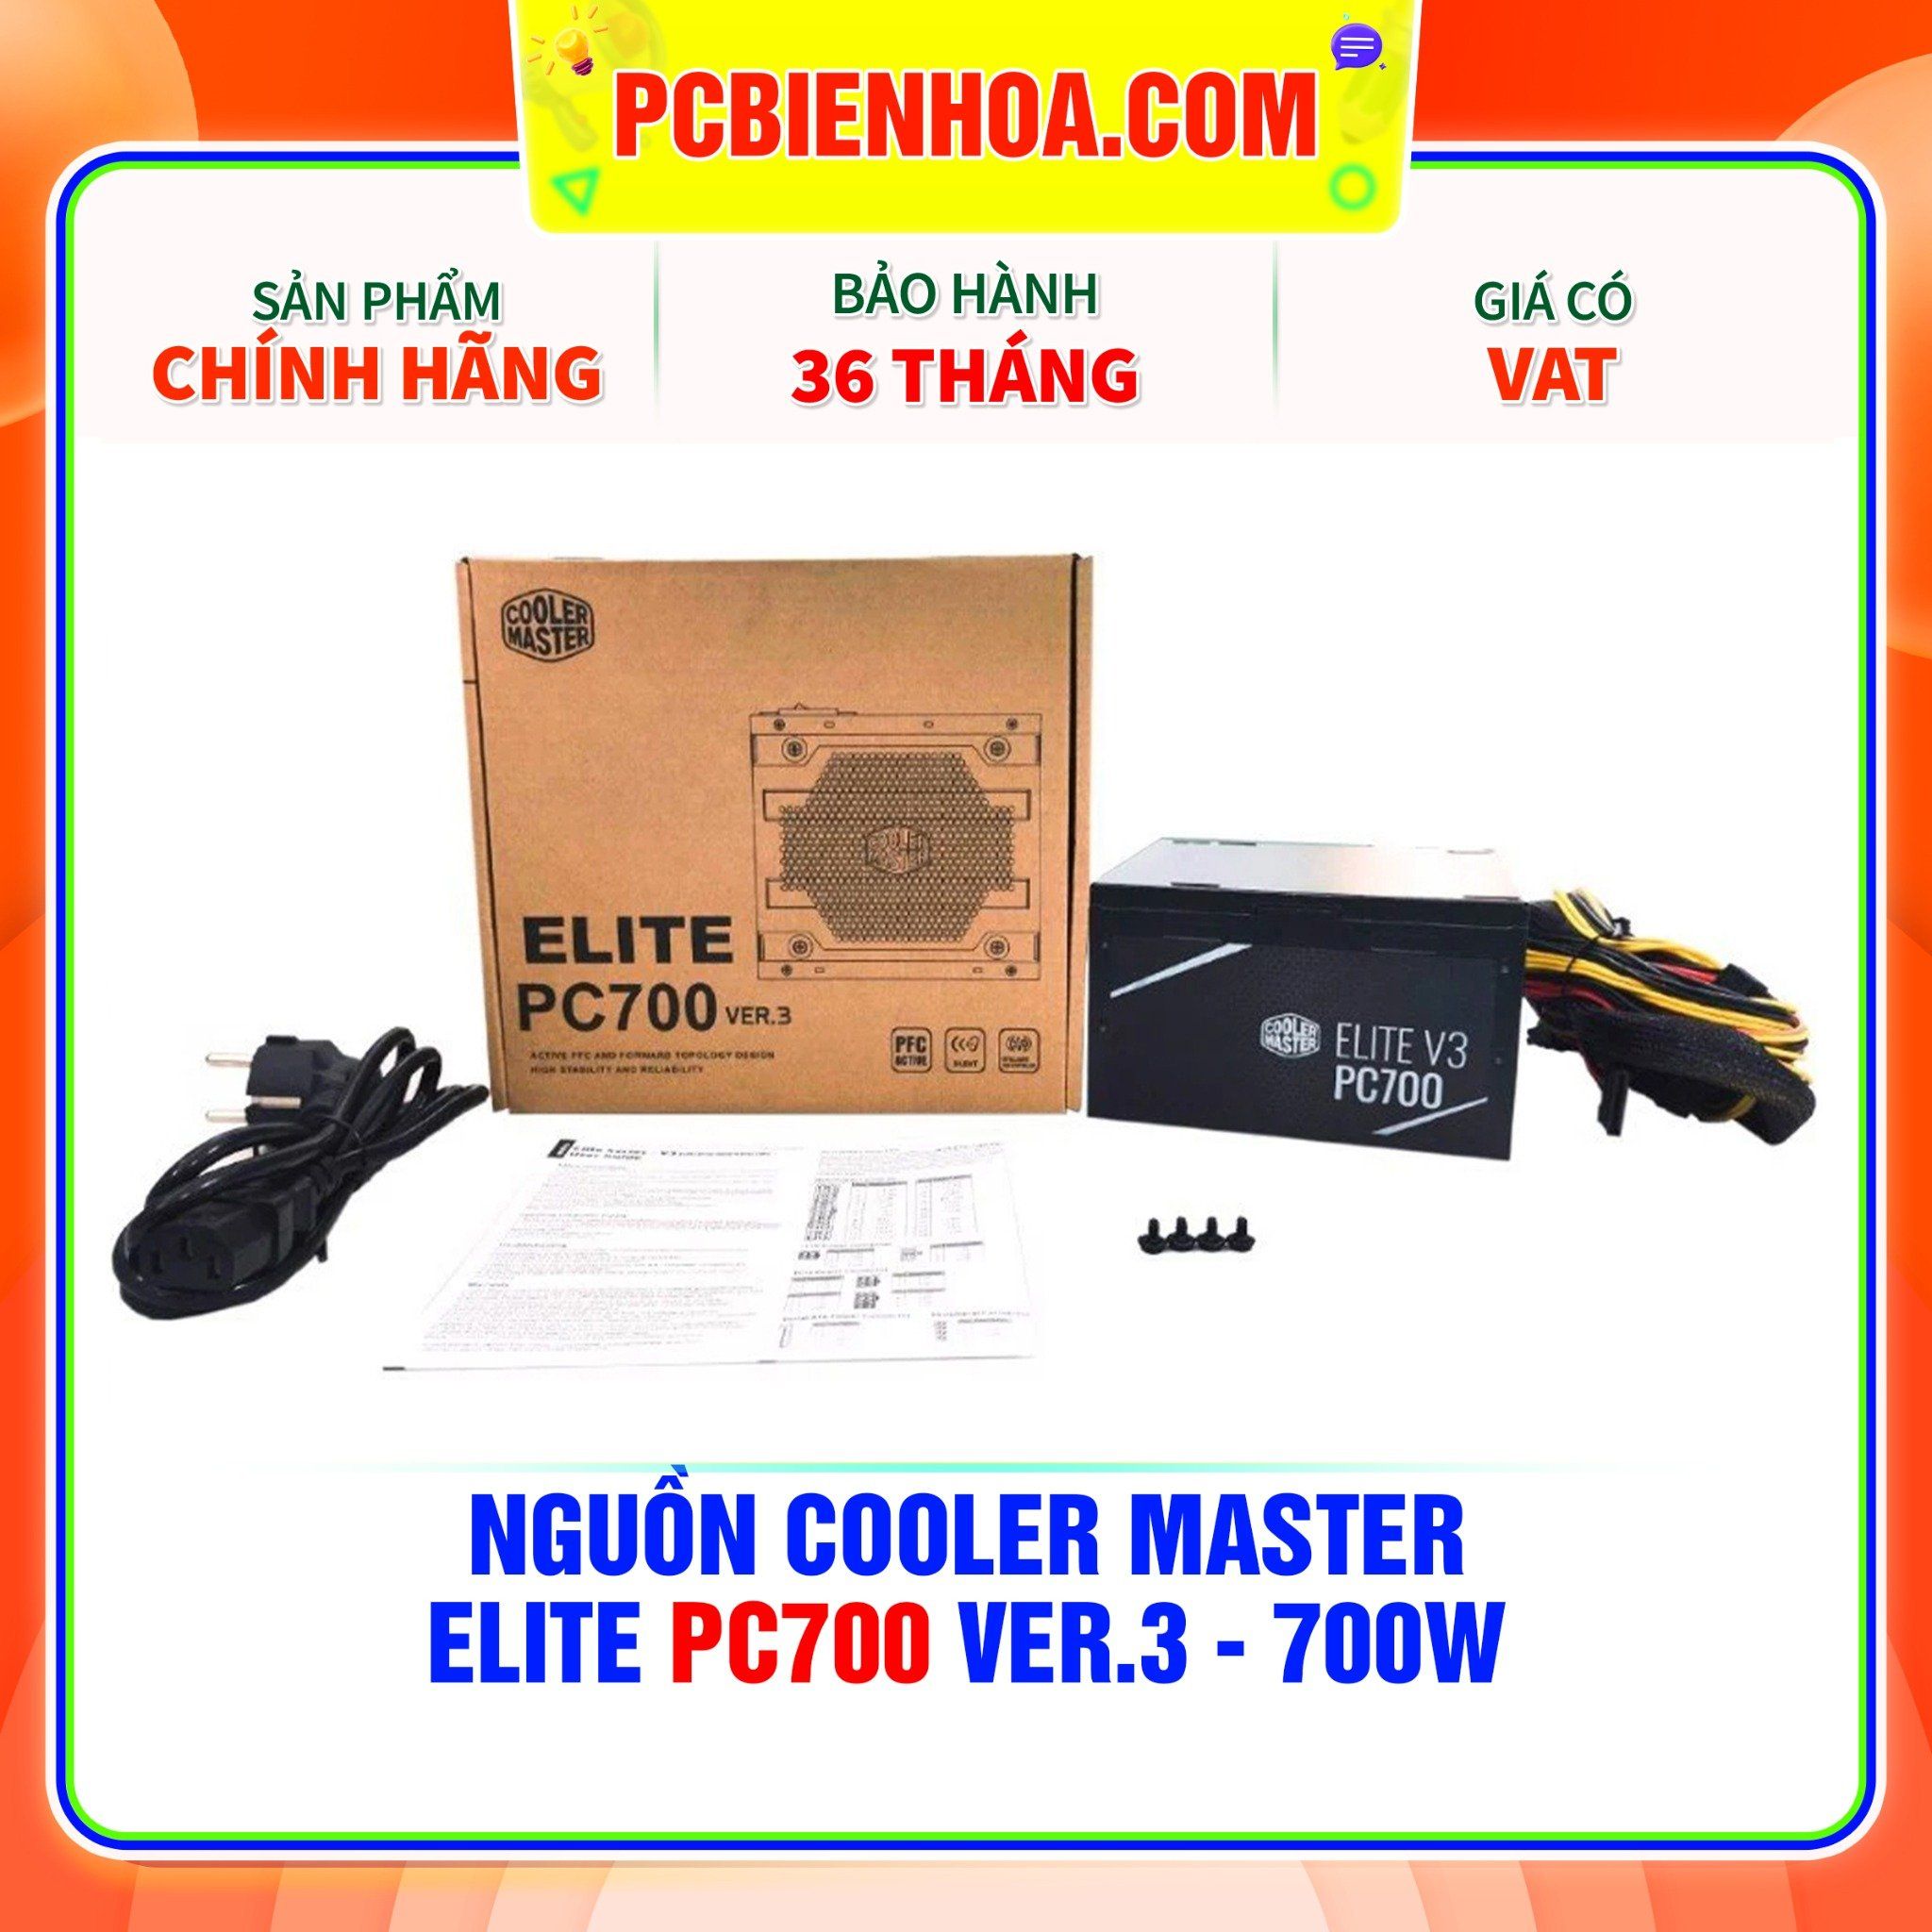  NGUỒN COOLER MASTER ELITE PC700 VER.3 - 700W 